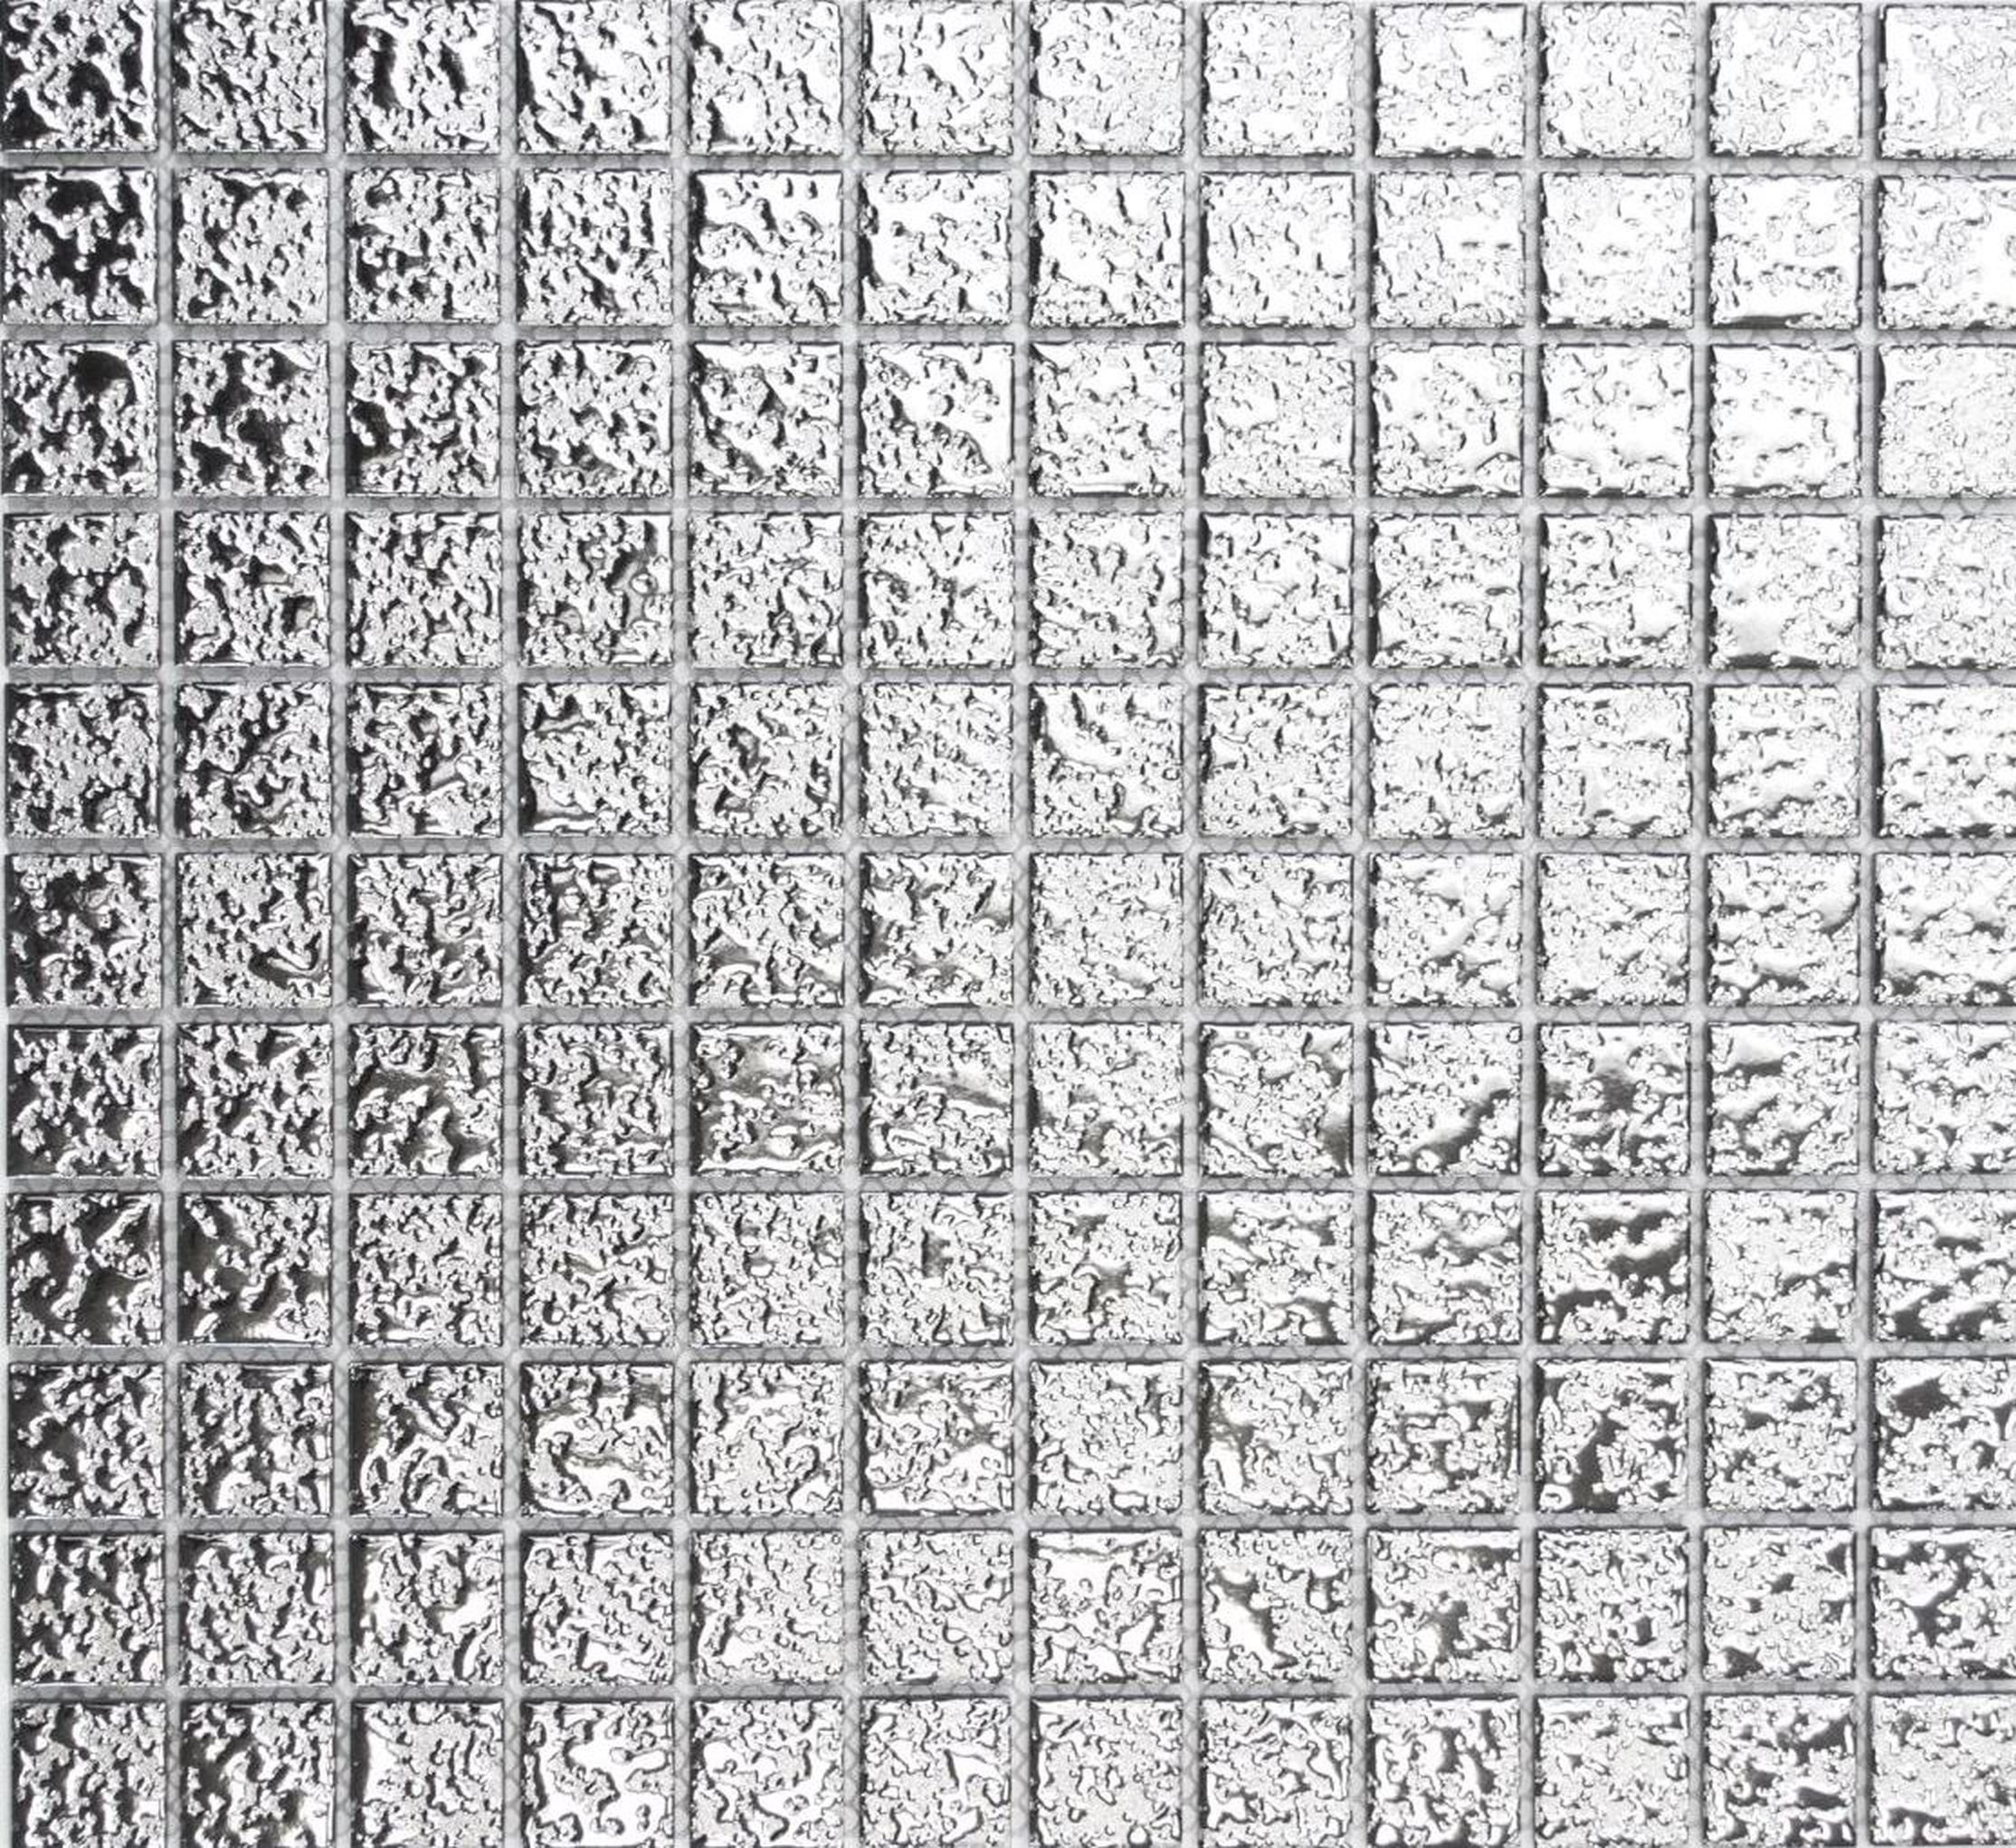 Mosani Mosaikfliesen Keramikmosaik Mosaikfliesen SILBER struktur Wand Küche